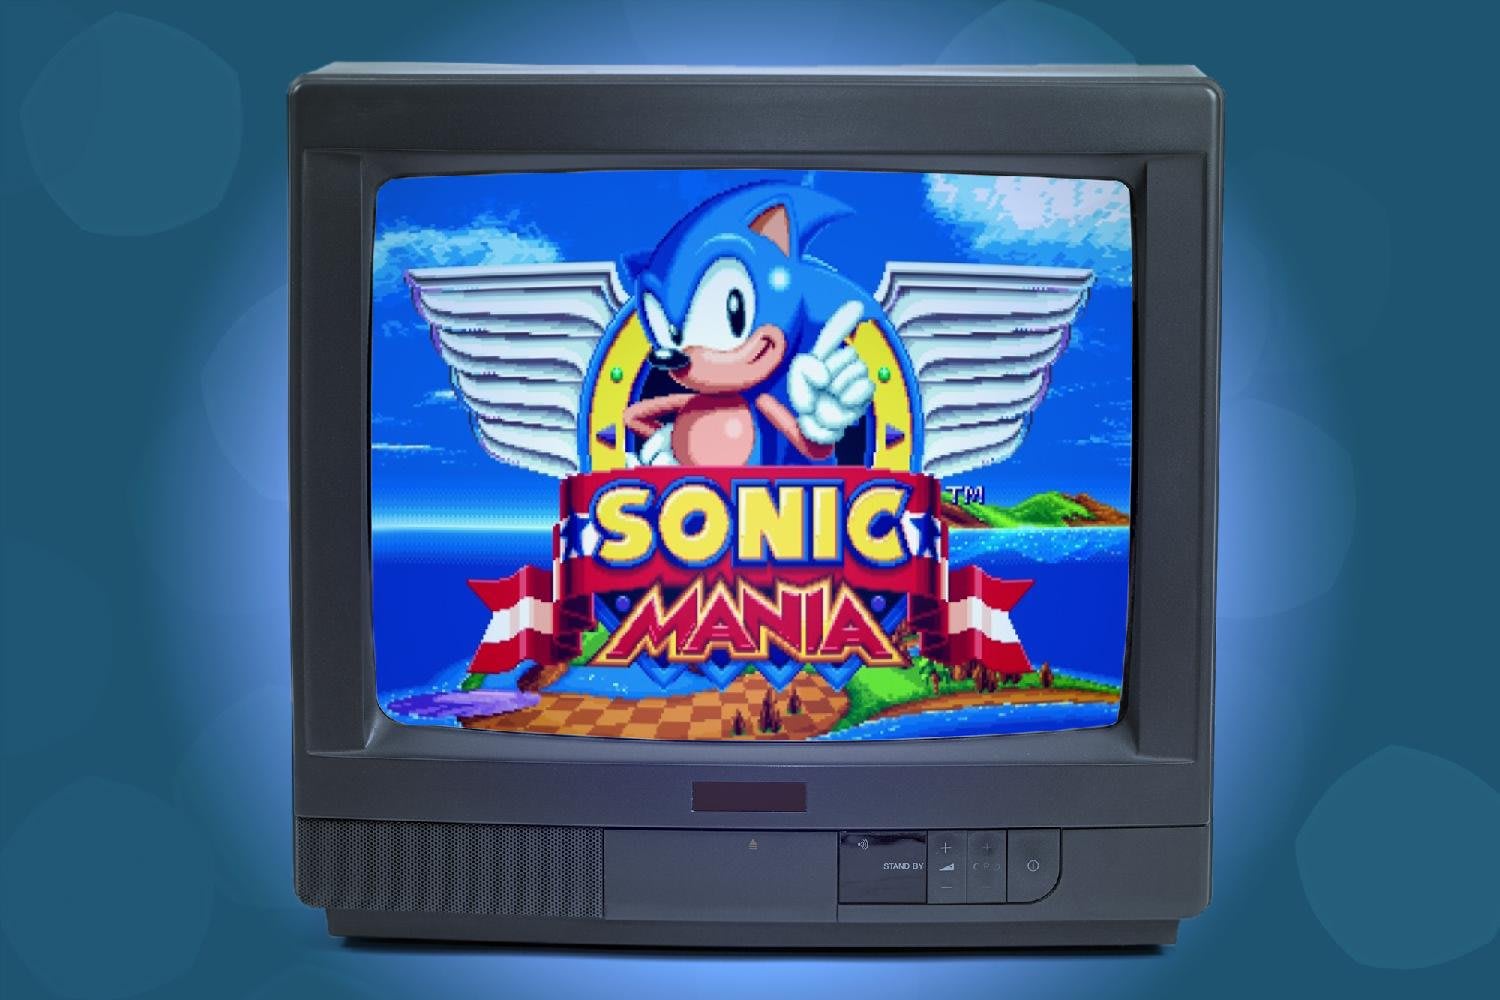 Sonic Mania (English Ver.)